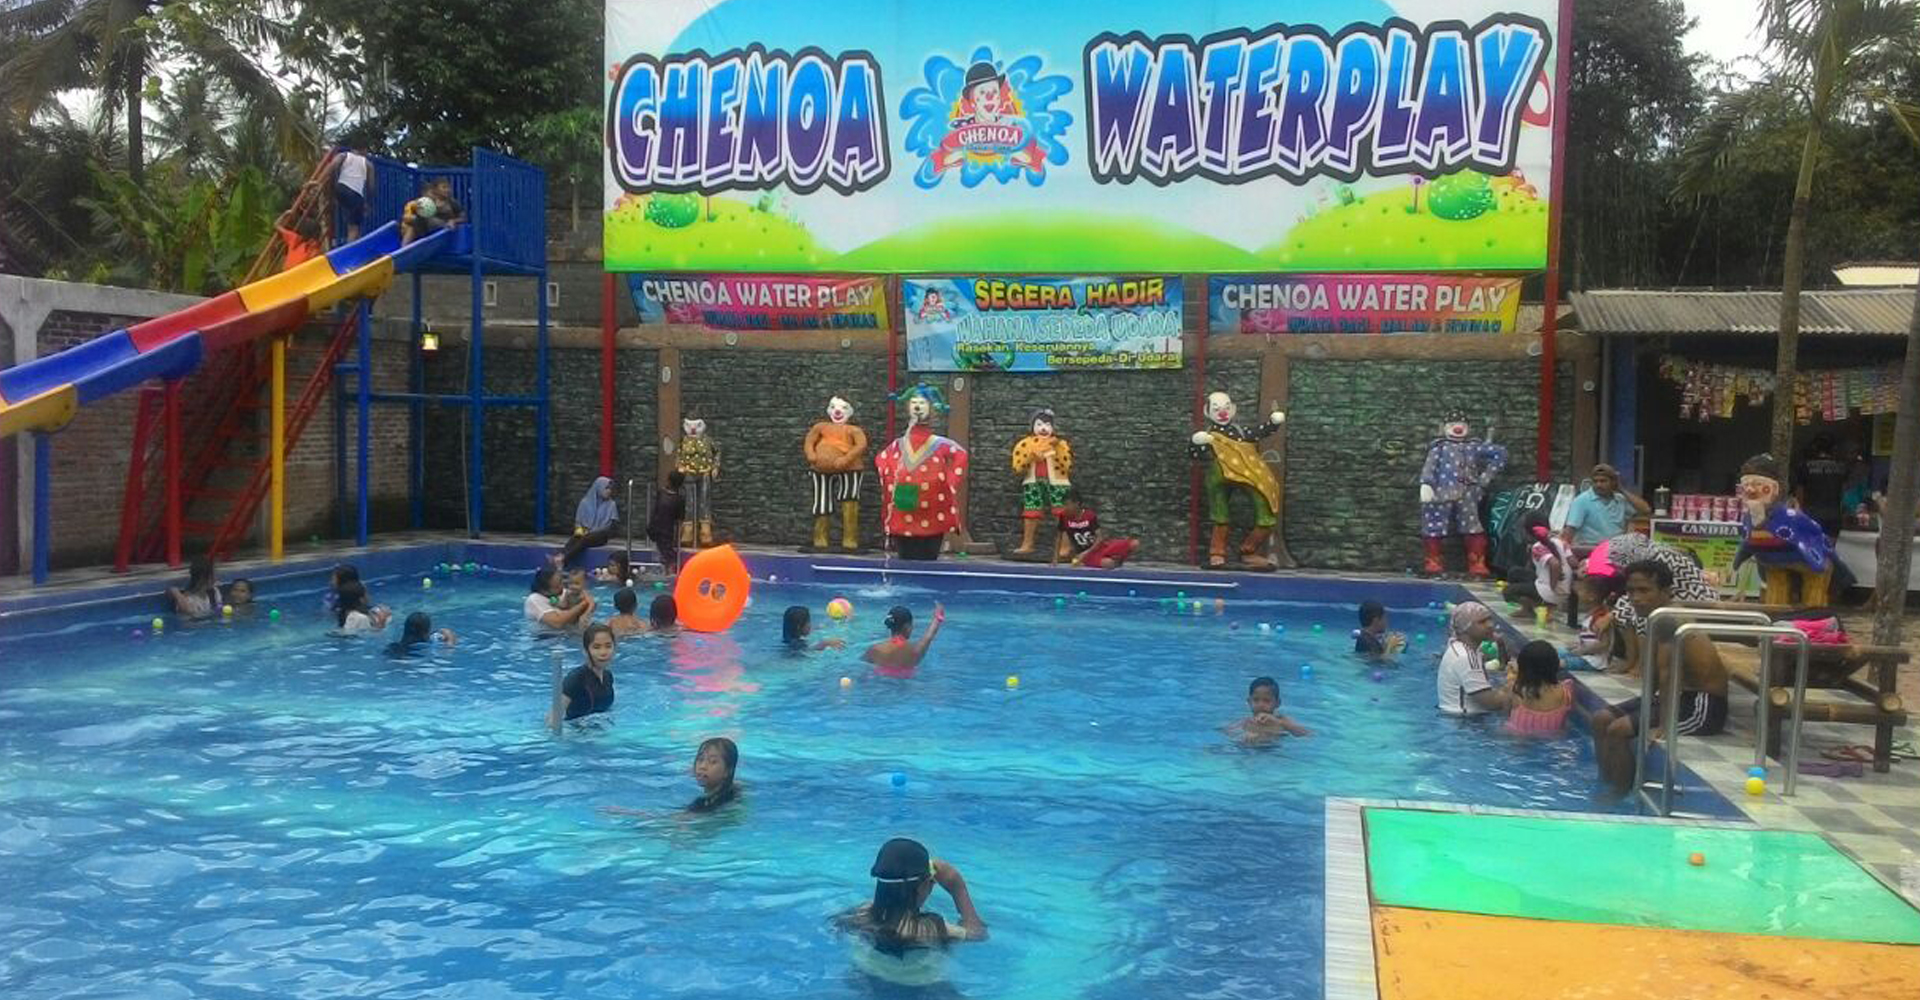 Chenoa Waterplay Kewadug : Harga Tiket, Foto, Lokasi, Fasilitas dan Spot